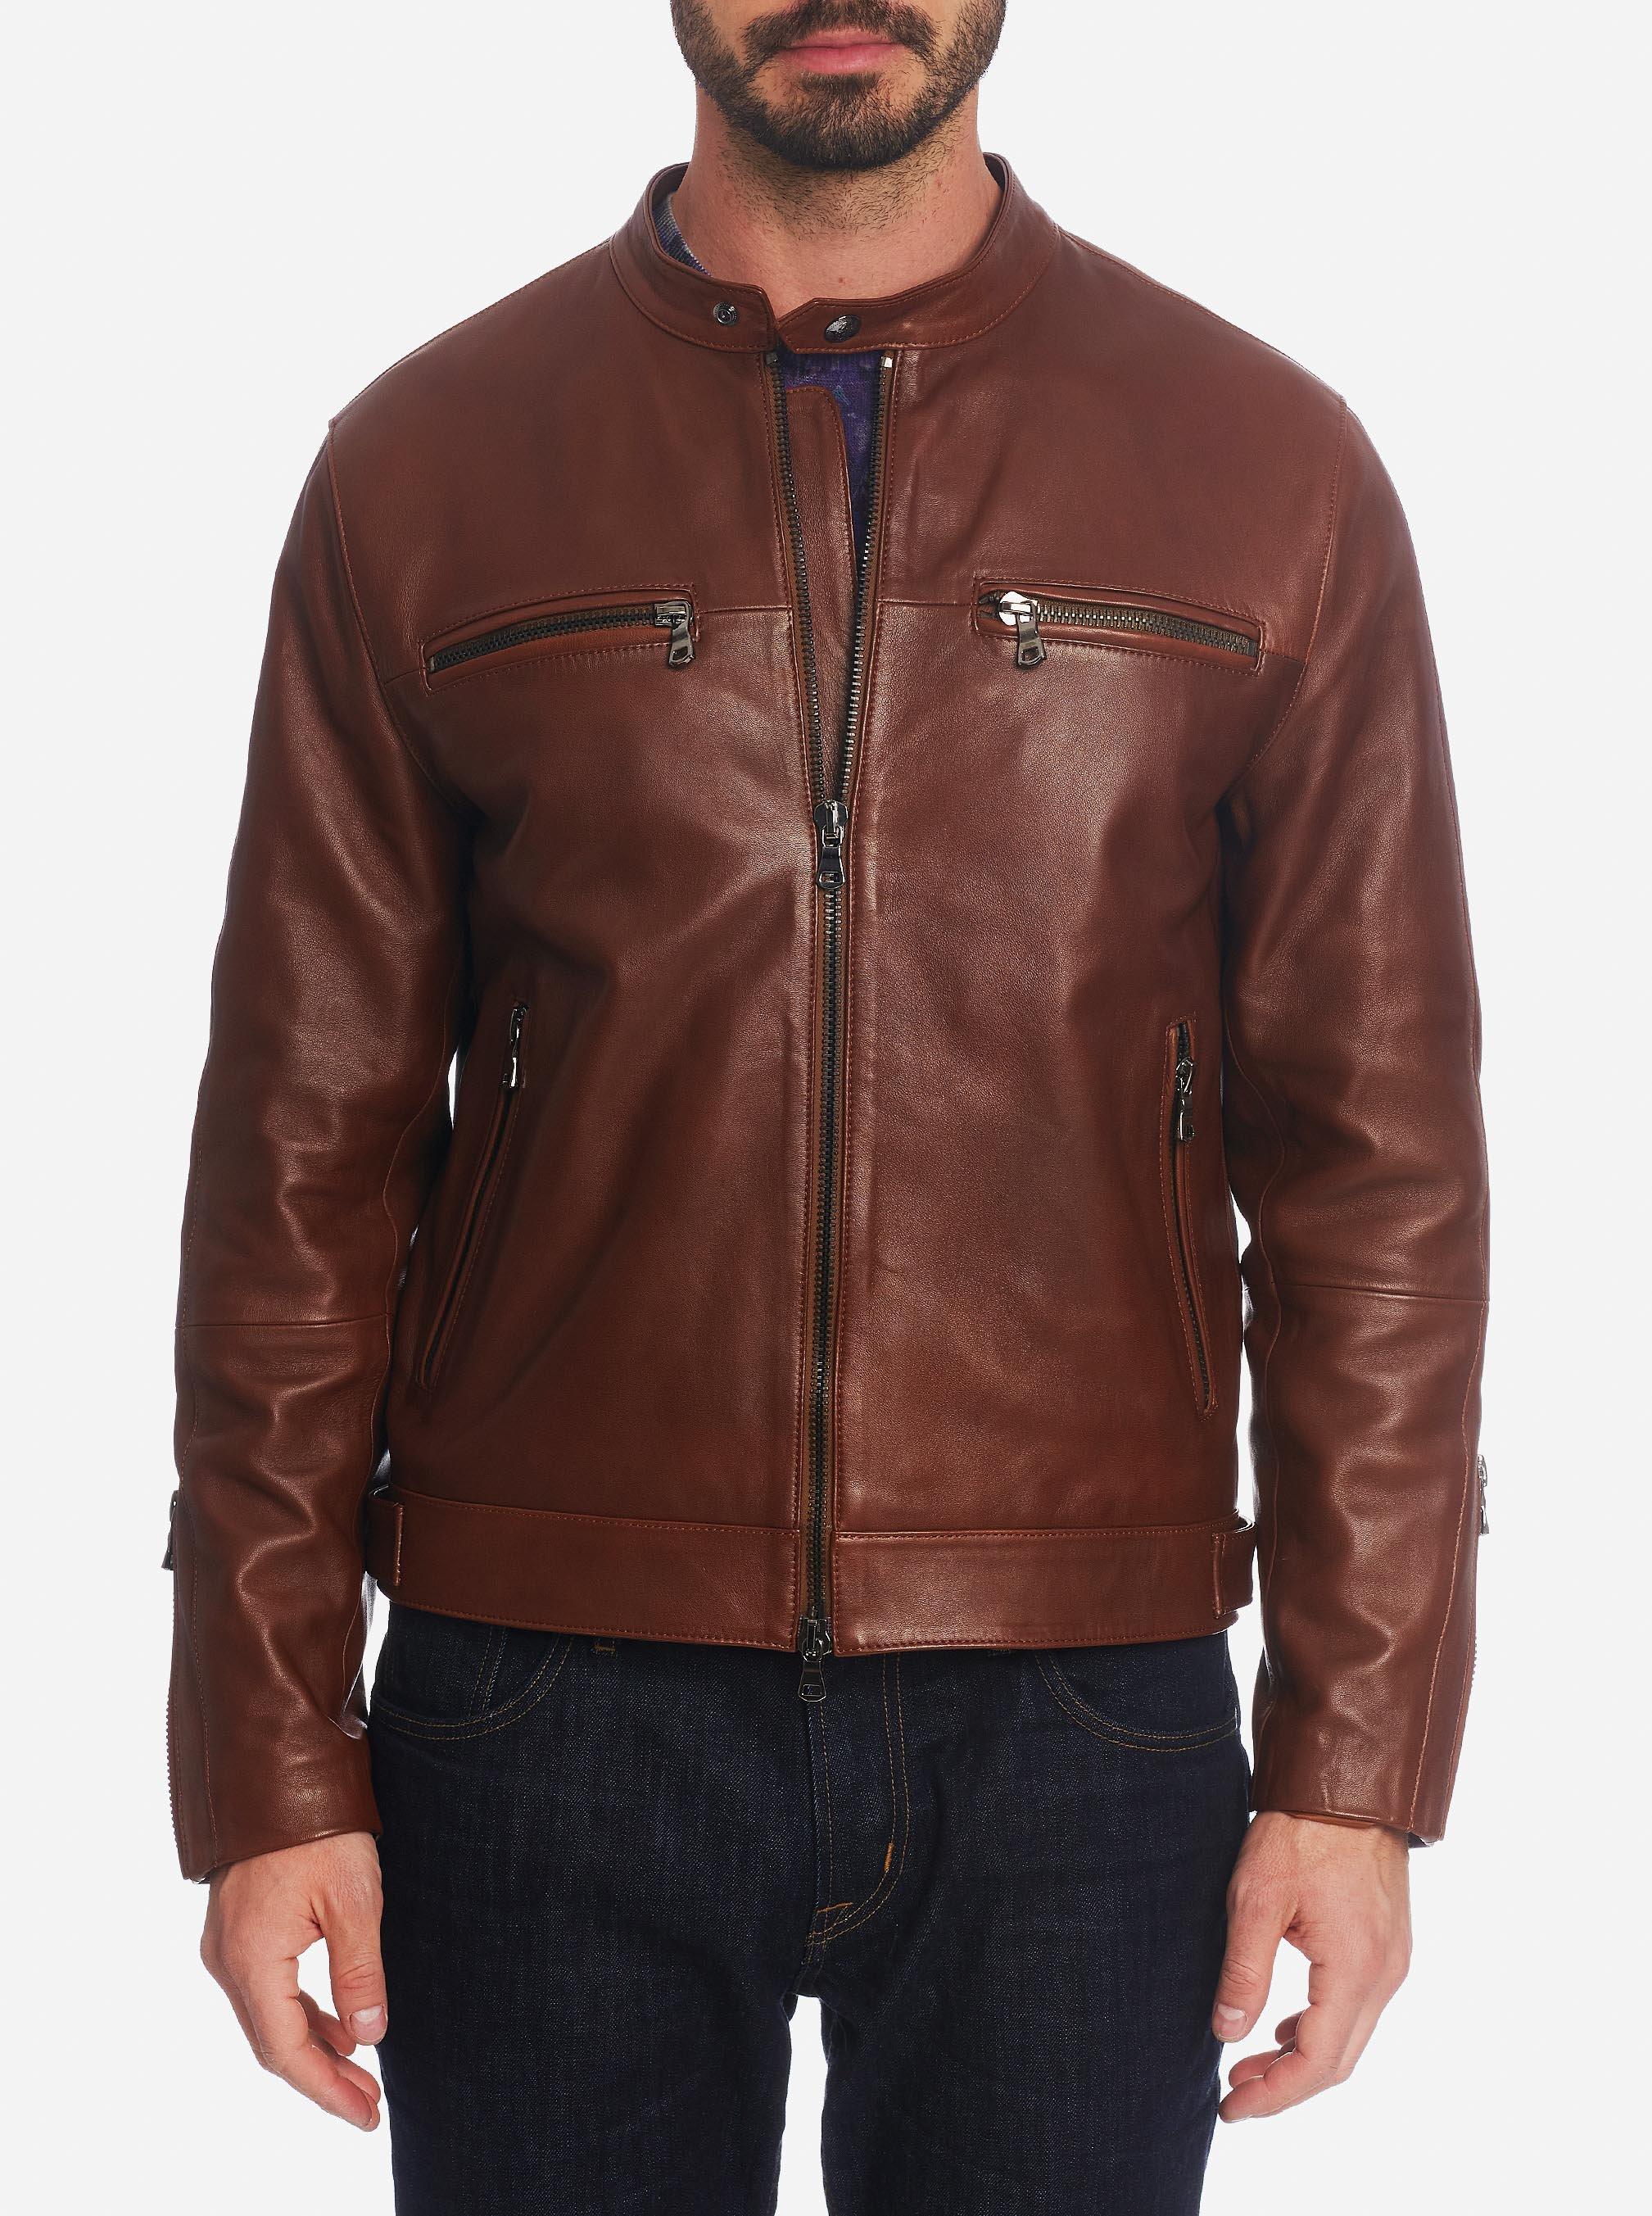 Robert Graham Roscoe Leather Jacket in Brown for Men - Lyst